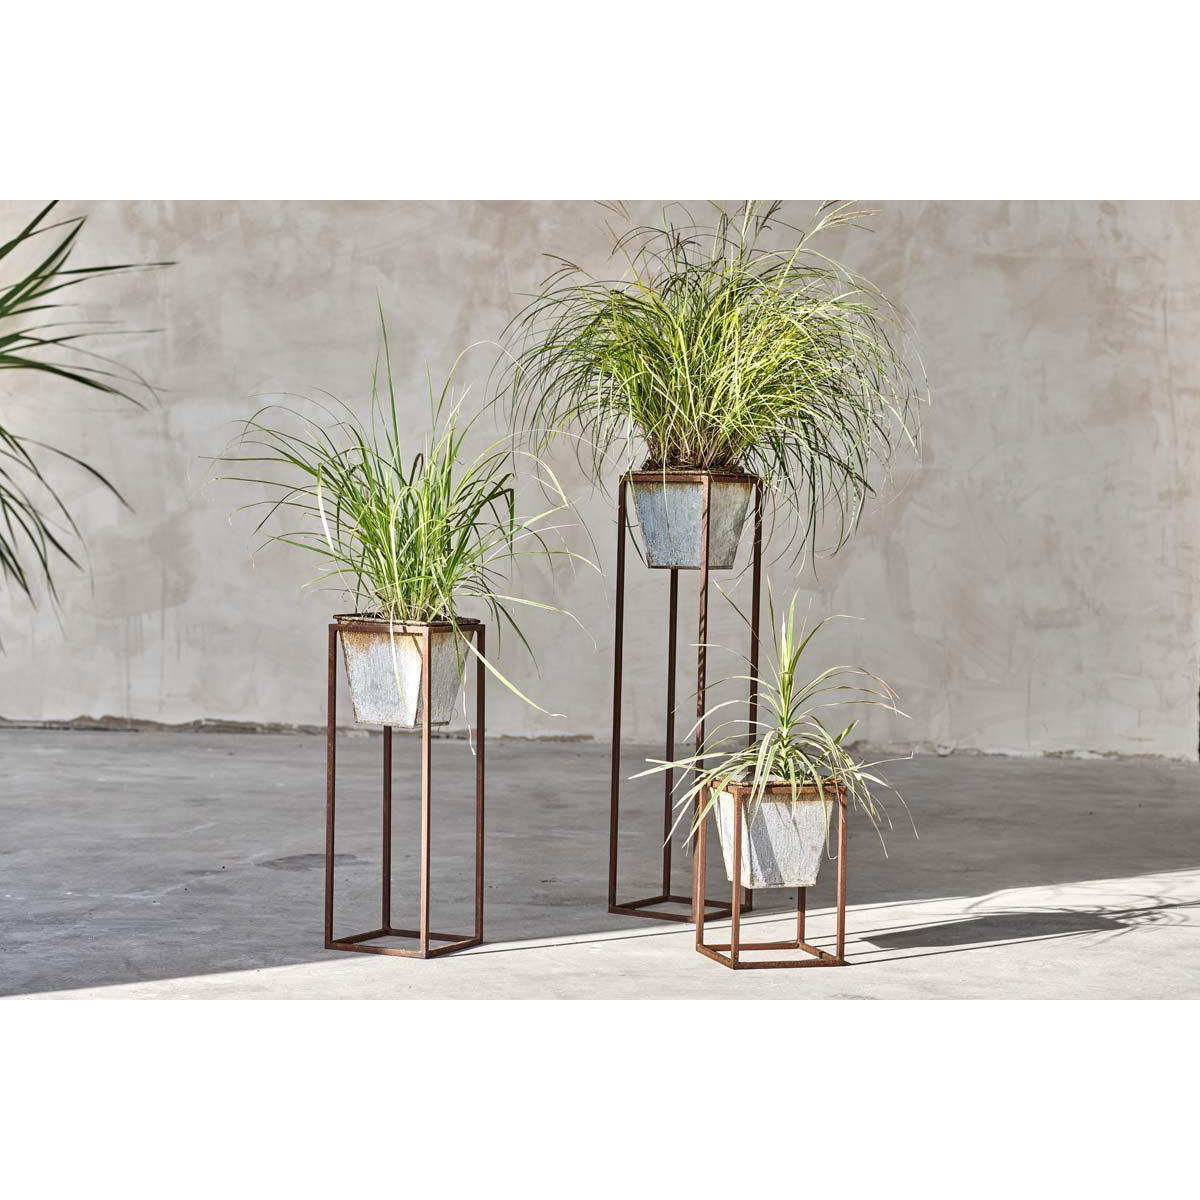 nkuku Narlu Planter Stand - Vases & Planters - Grey - Large 76.5 x 17 x 17 cm